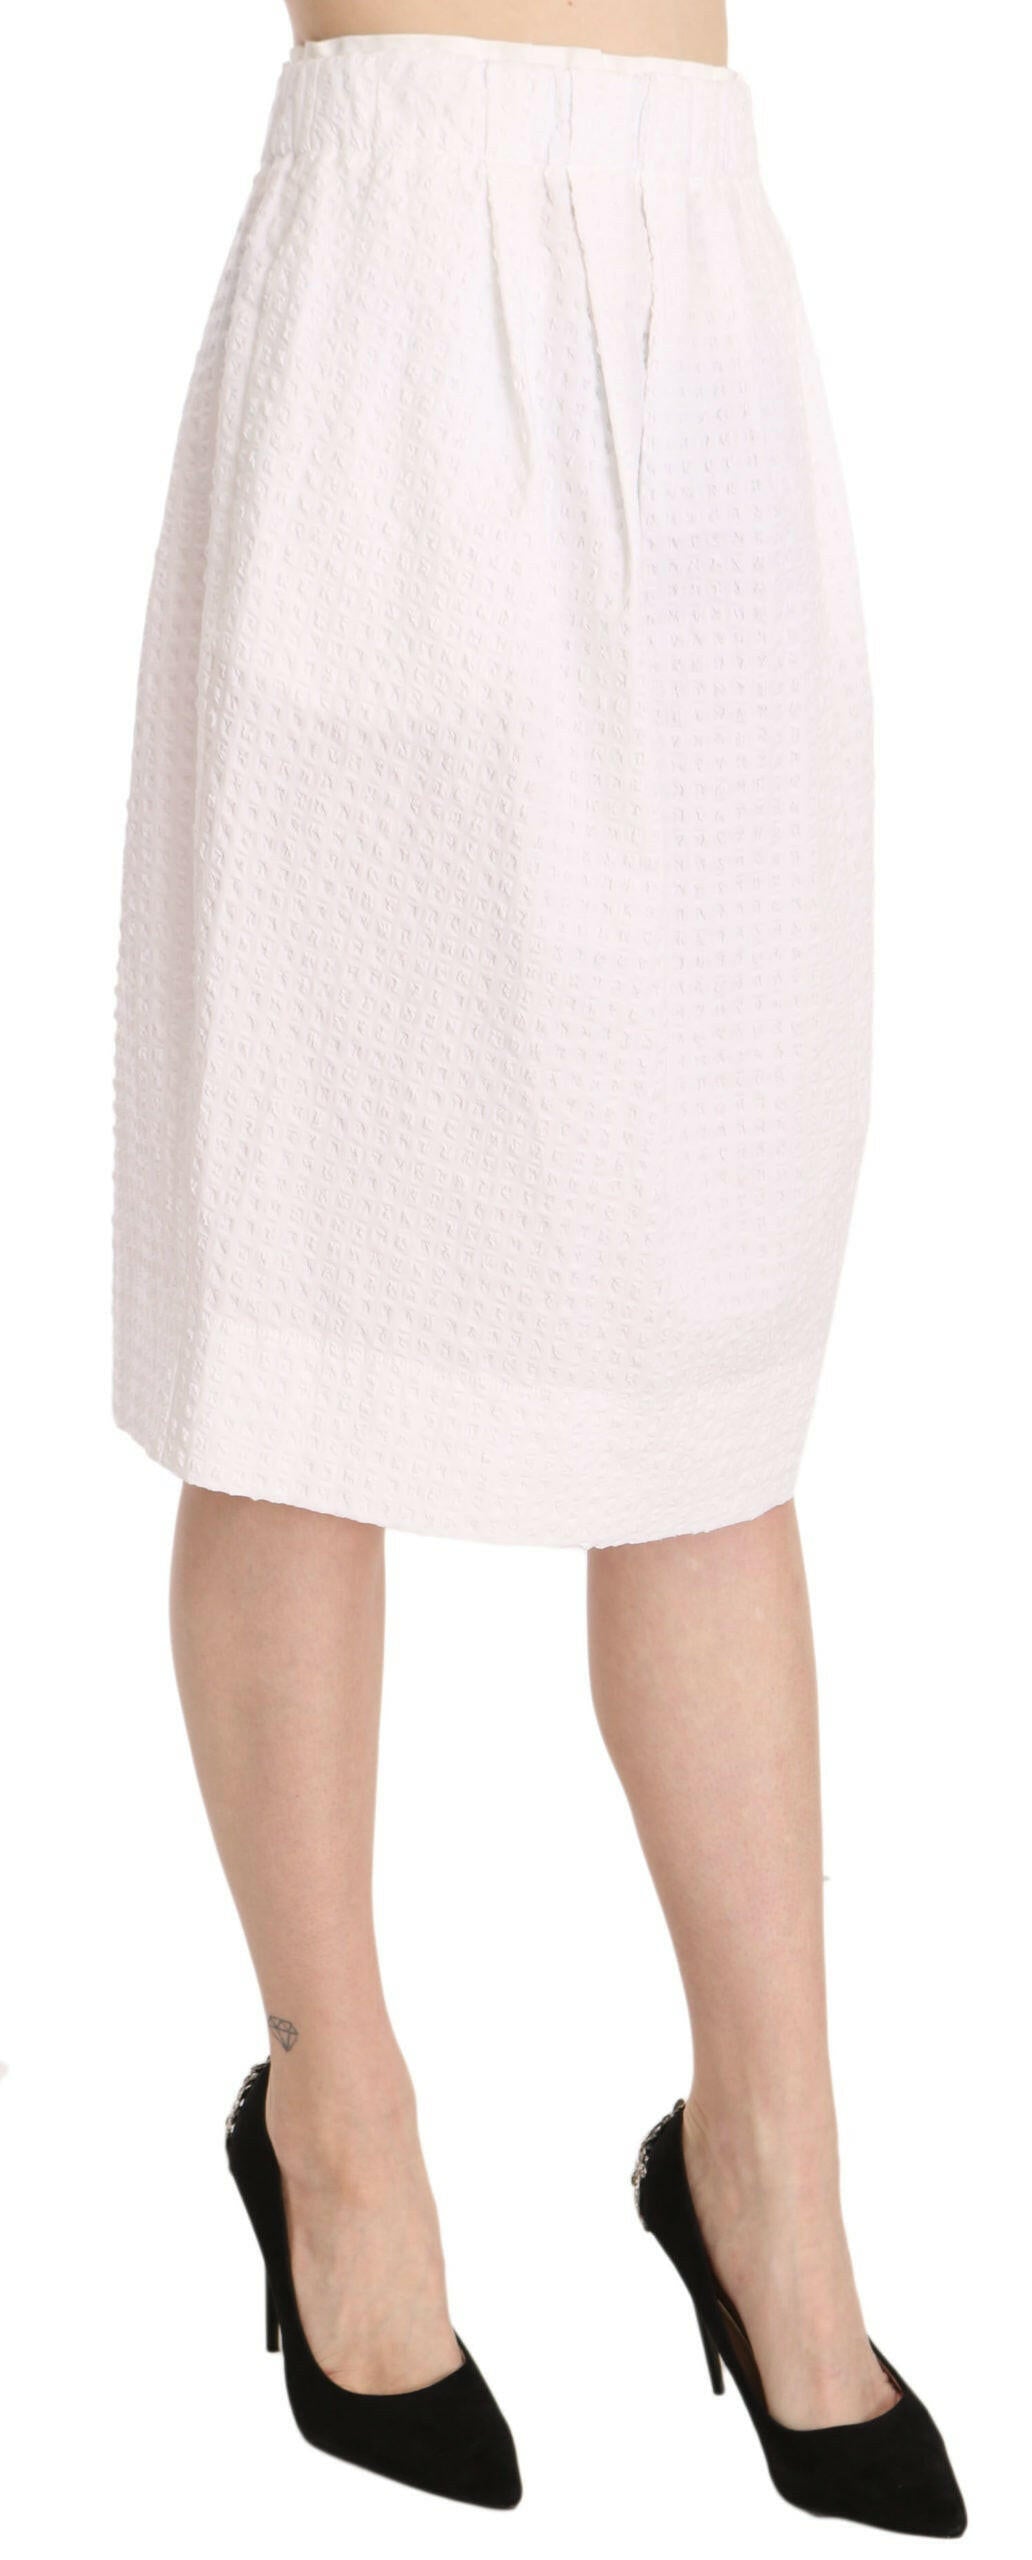 L'Autre Chose White Jacquard Plain Weave Stretch Midi Skirt - GENUINE AUTHENTIC BRAND LLC  